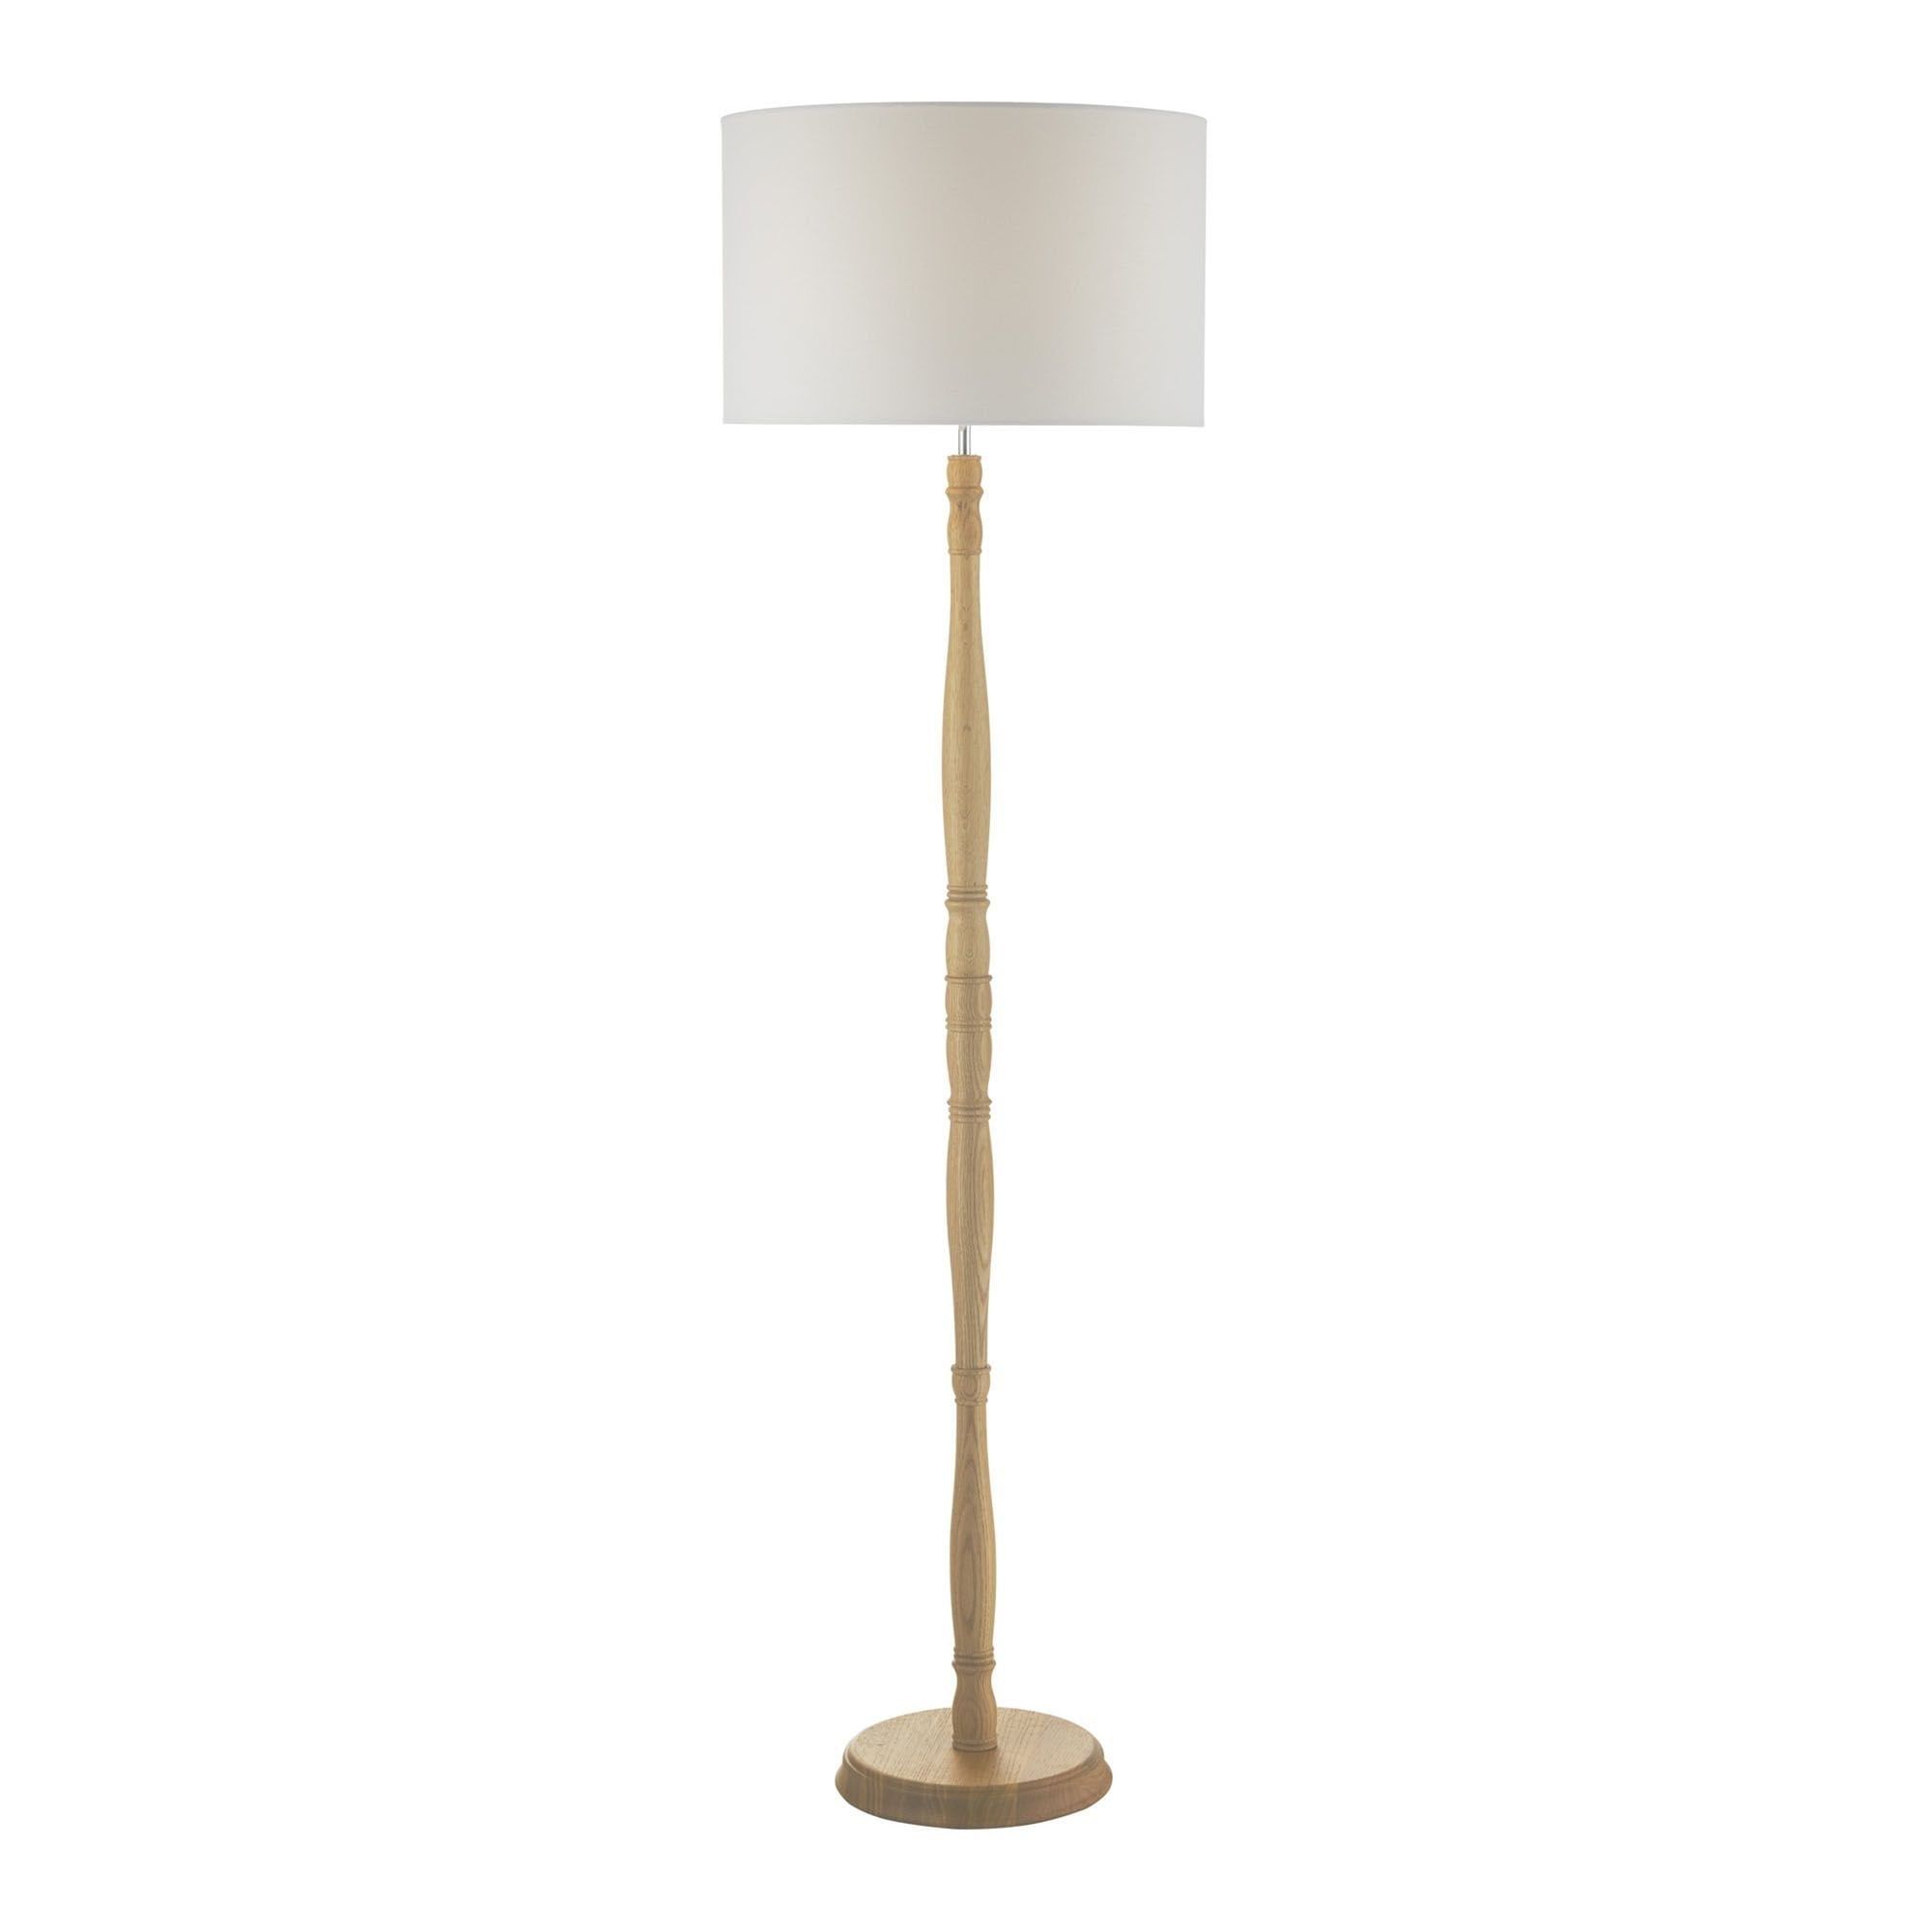 Wooden Oak Finish Floor Lamp Base Only| Lighting And Lights Uk| In Oak Floor Lamps (View 12 of 15)